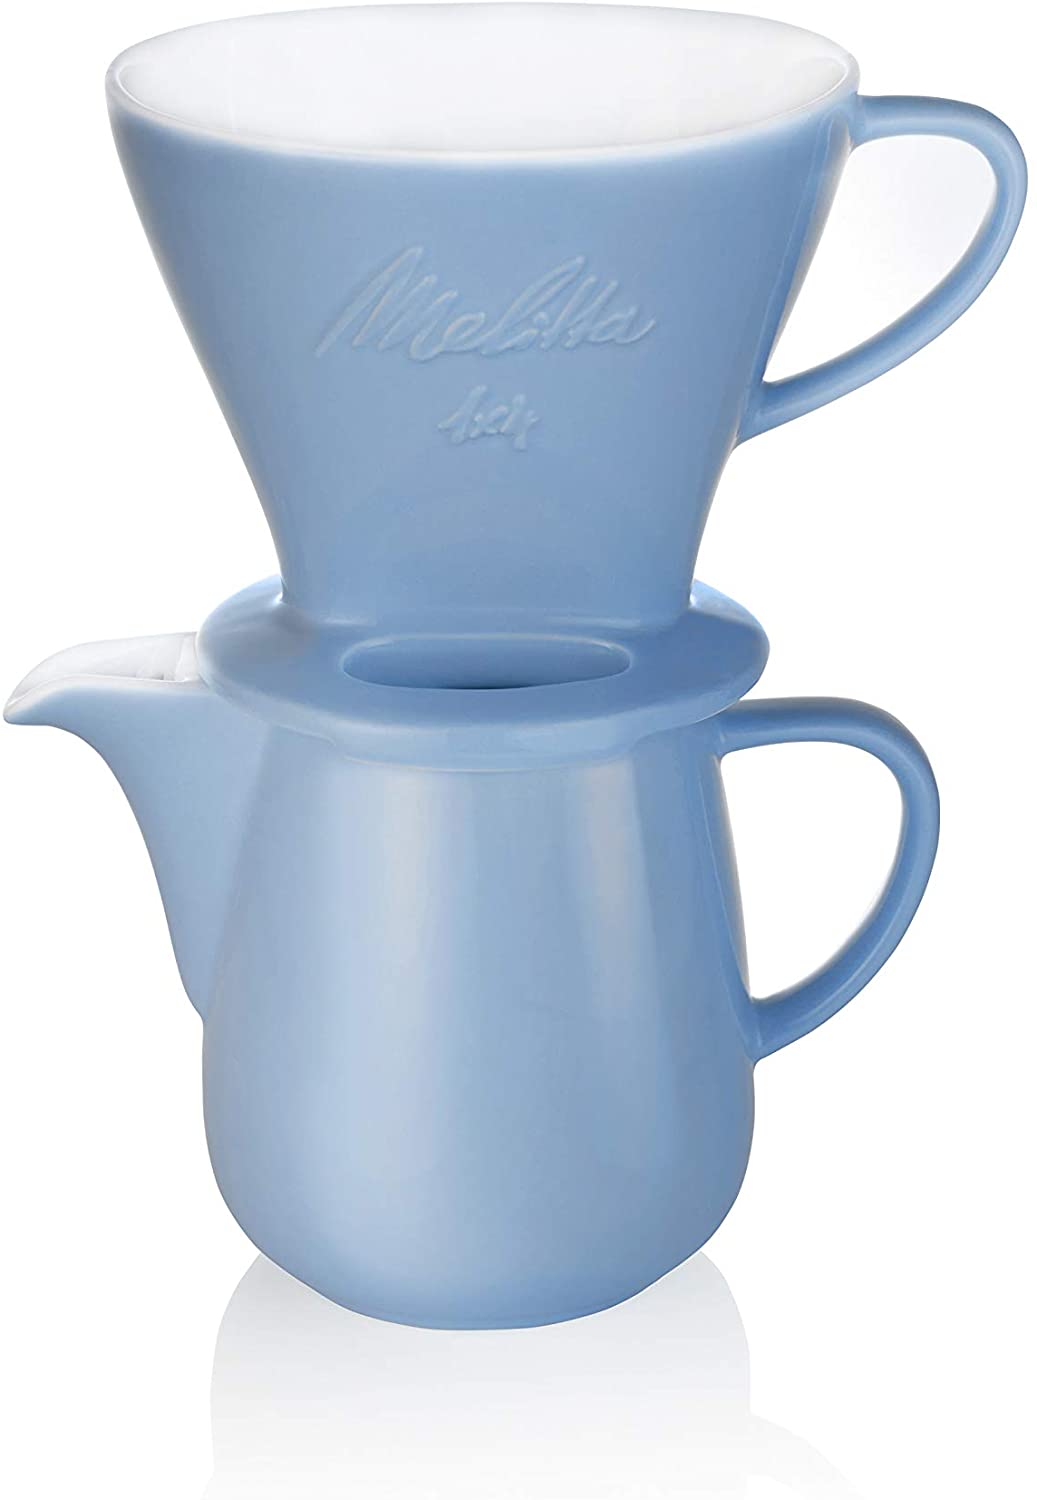 Melitta Filter, Porcelain Coffee Filter